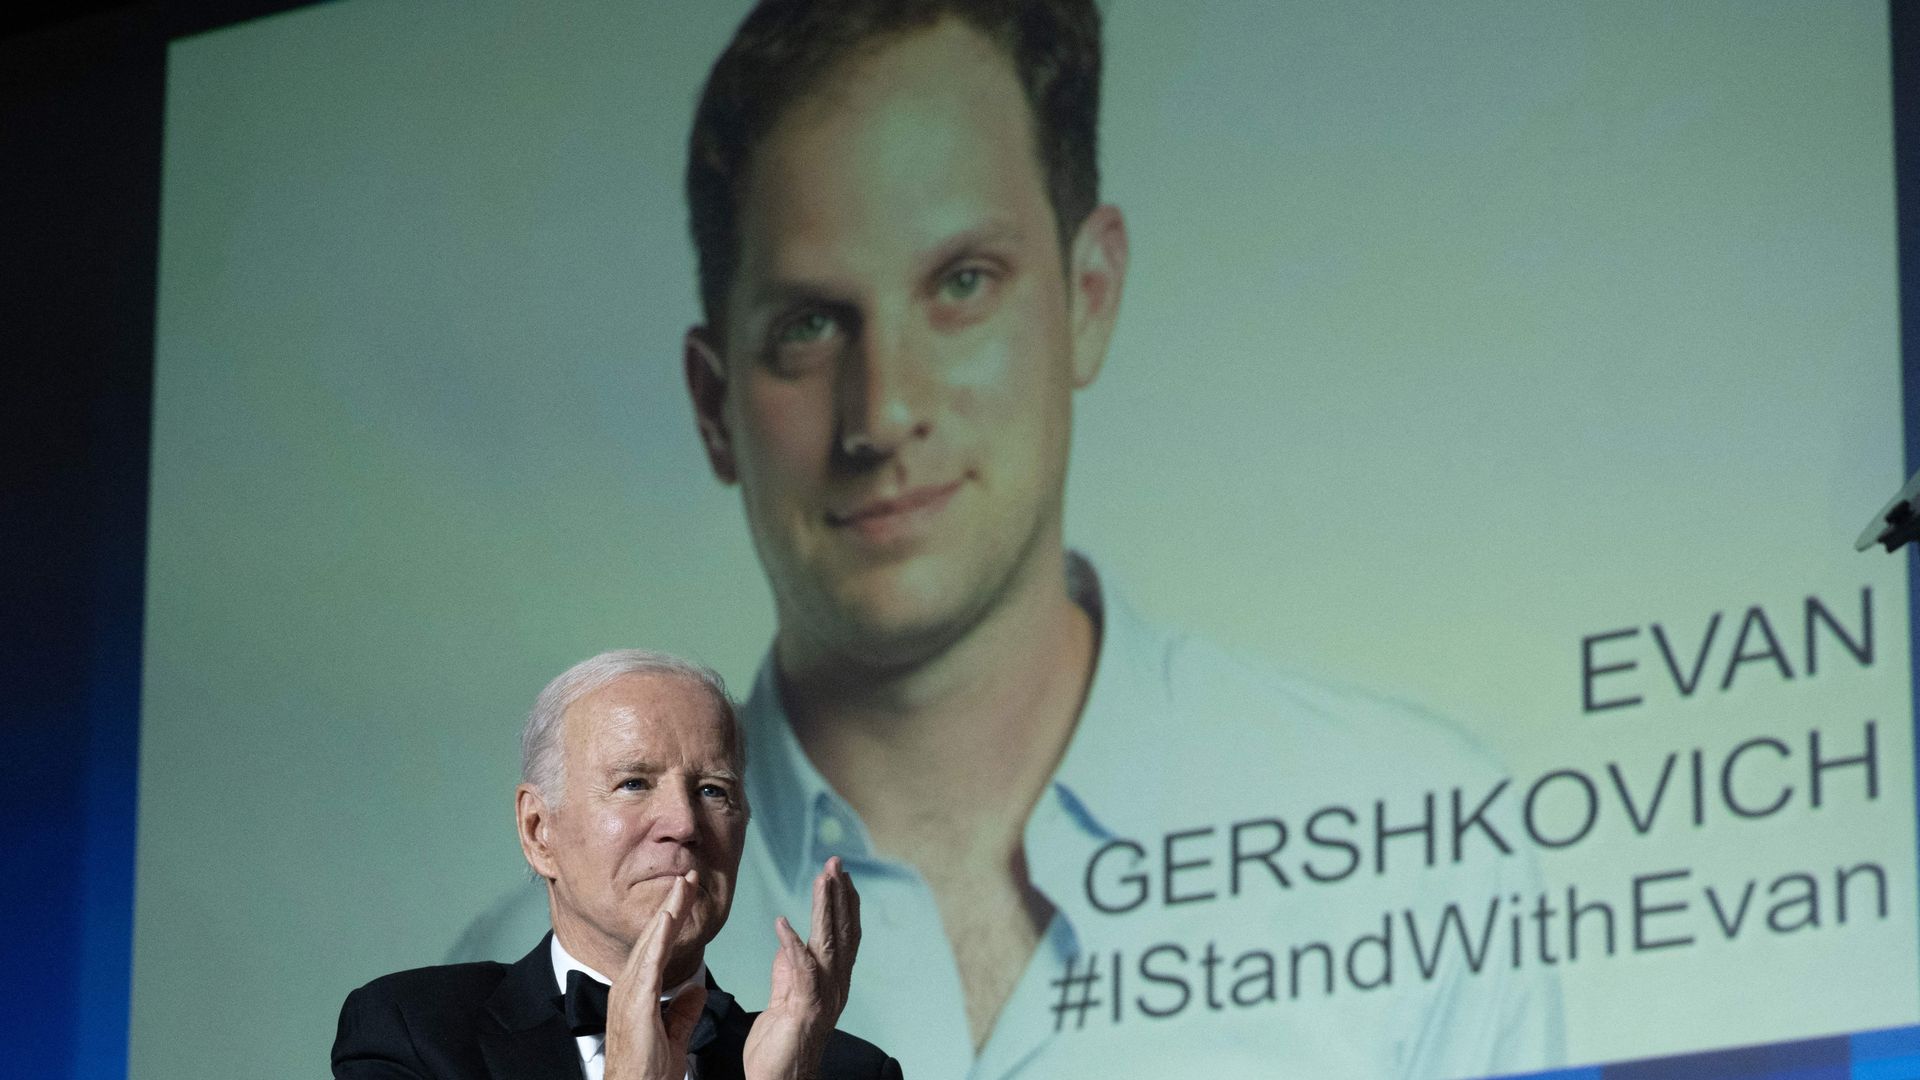 Joe Biden gestures as an image of US journalist Evan Gershkovich appears onscreen during the White House Correspondents' Association dinner